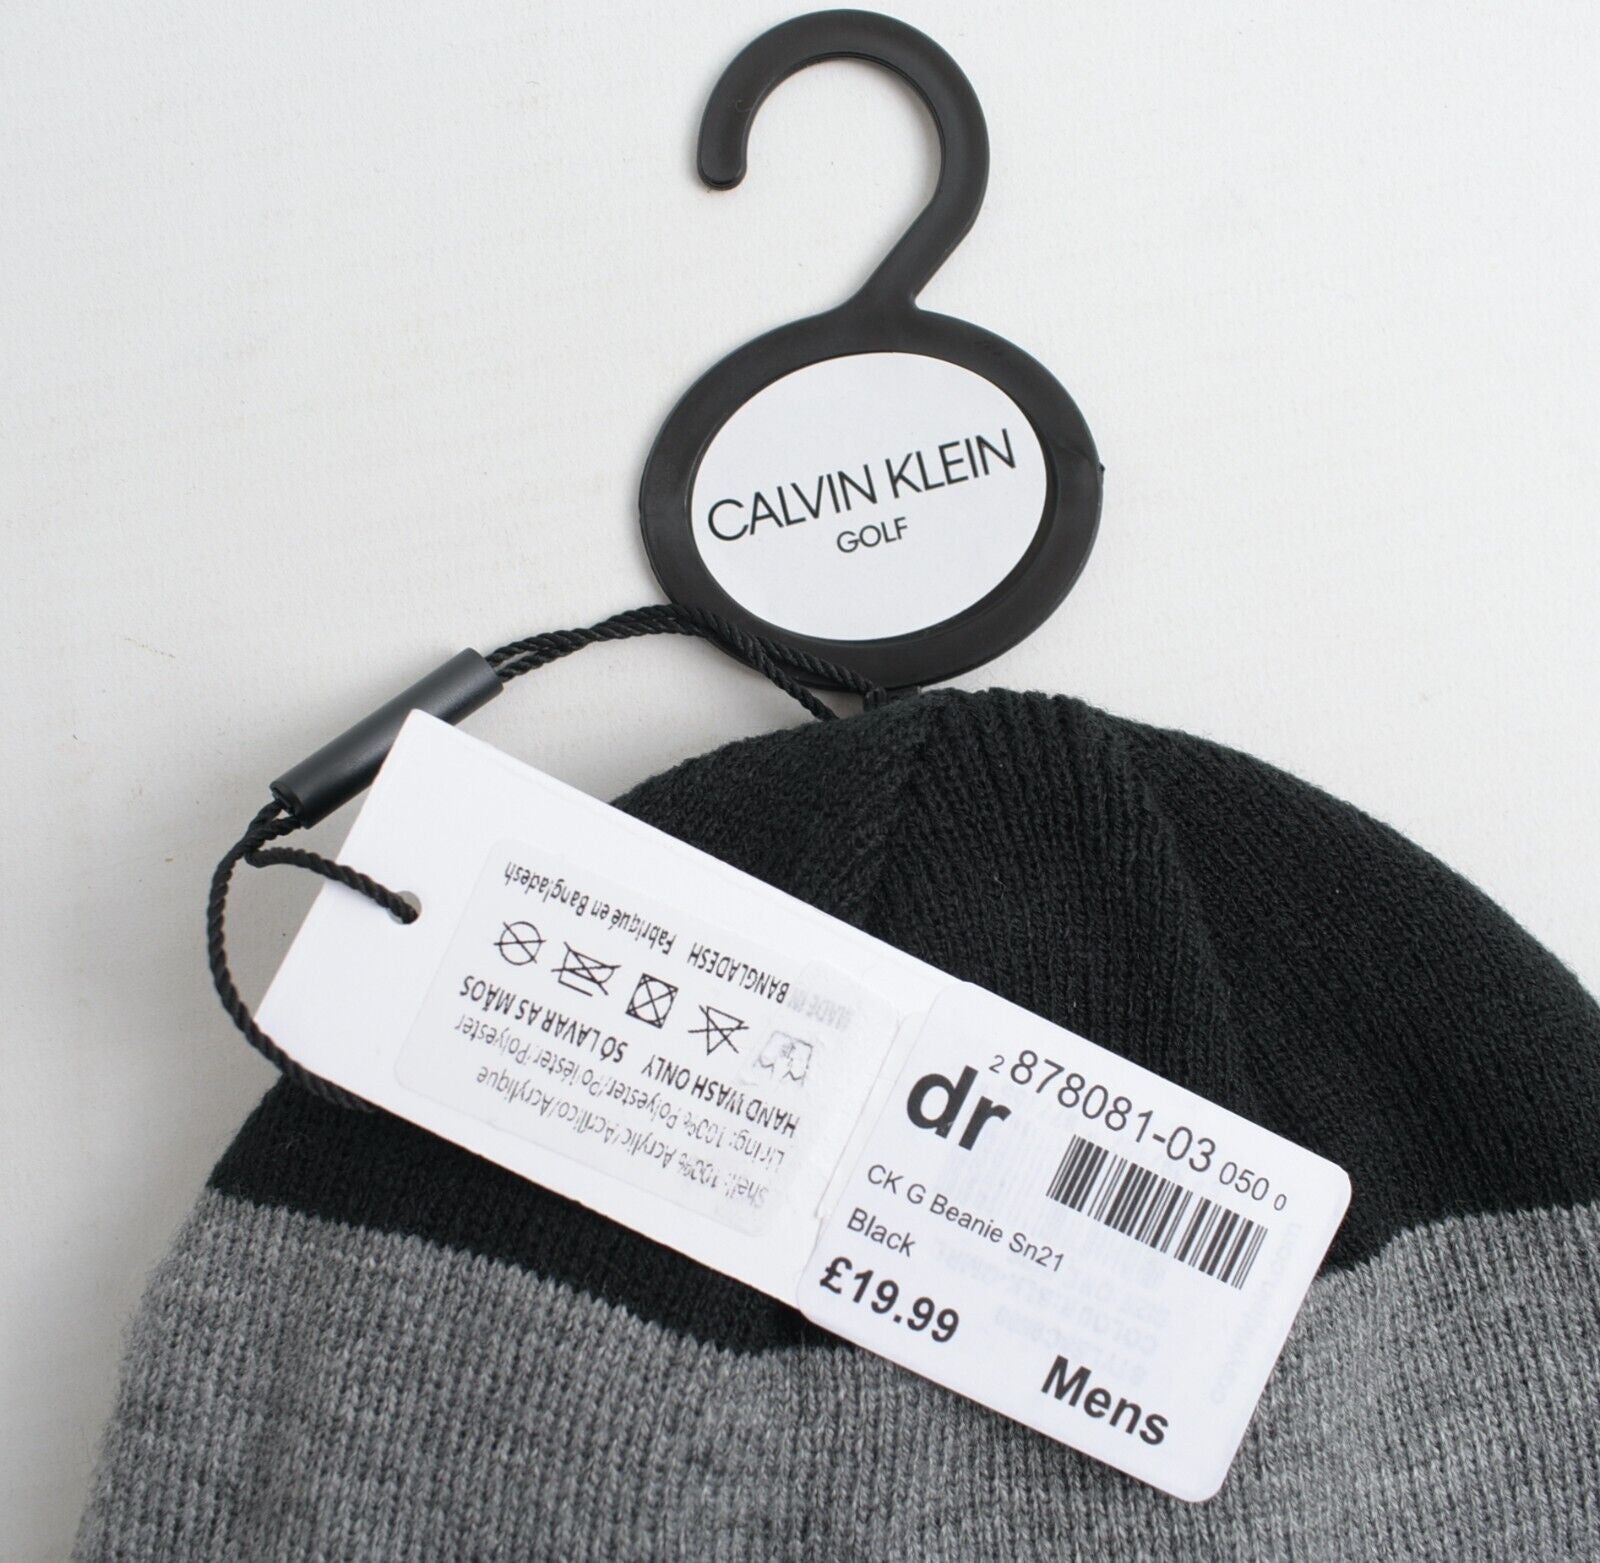 CALVIN KLEIN GOLF Men's Reversible Beanie Hat, Black/Grey, One Size Adult